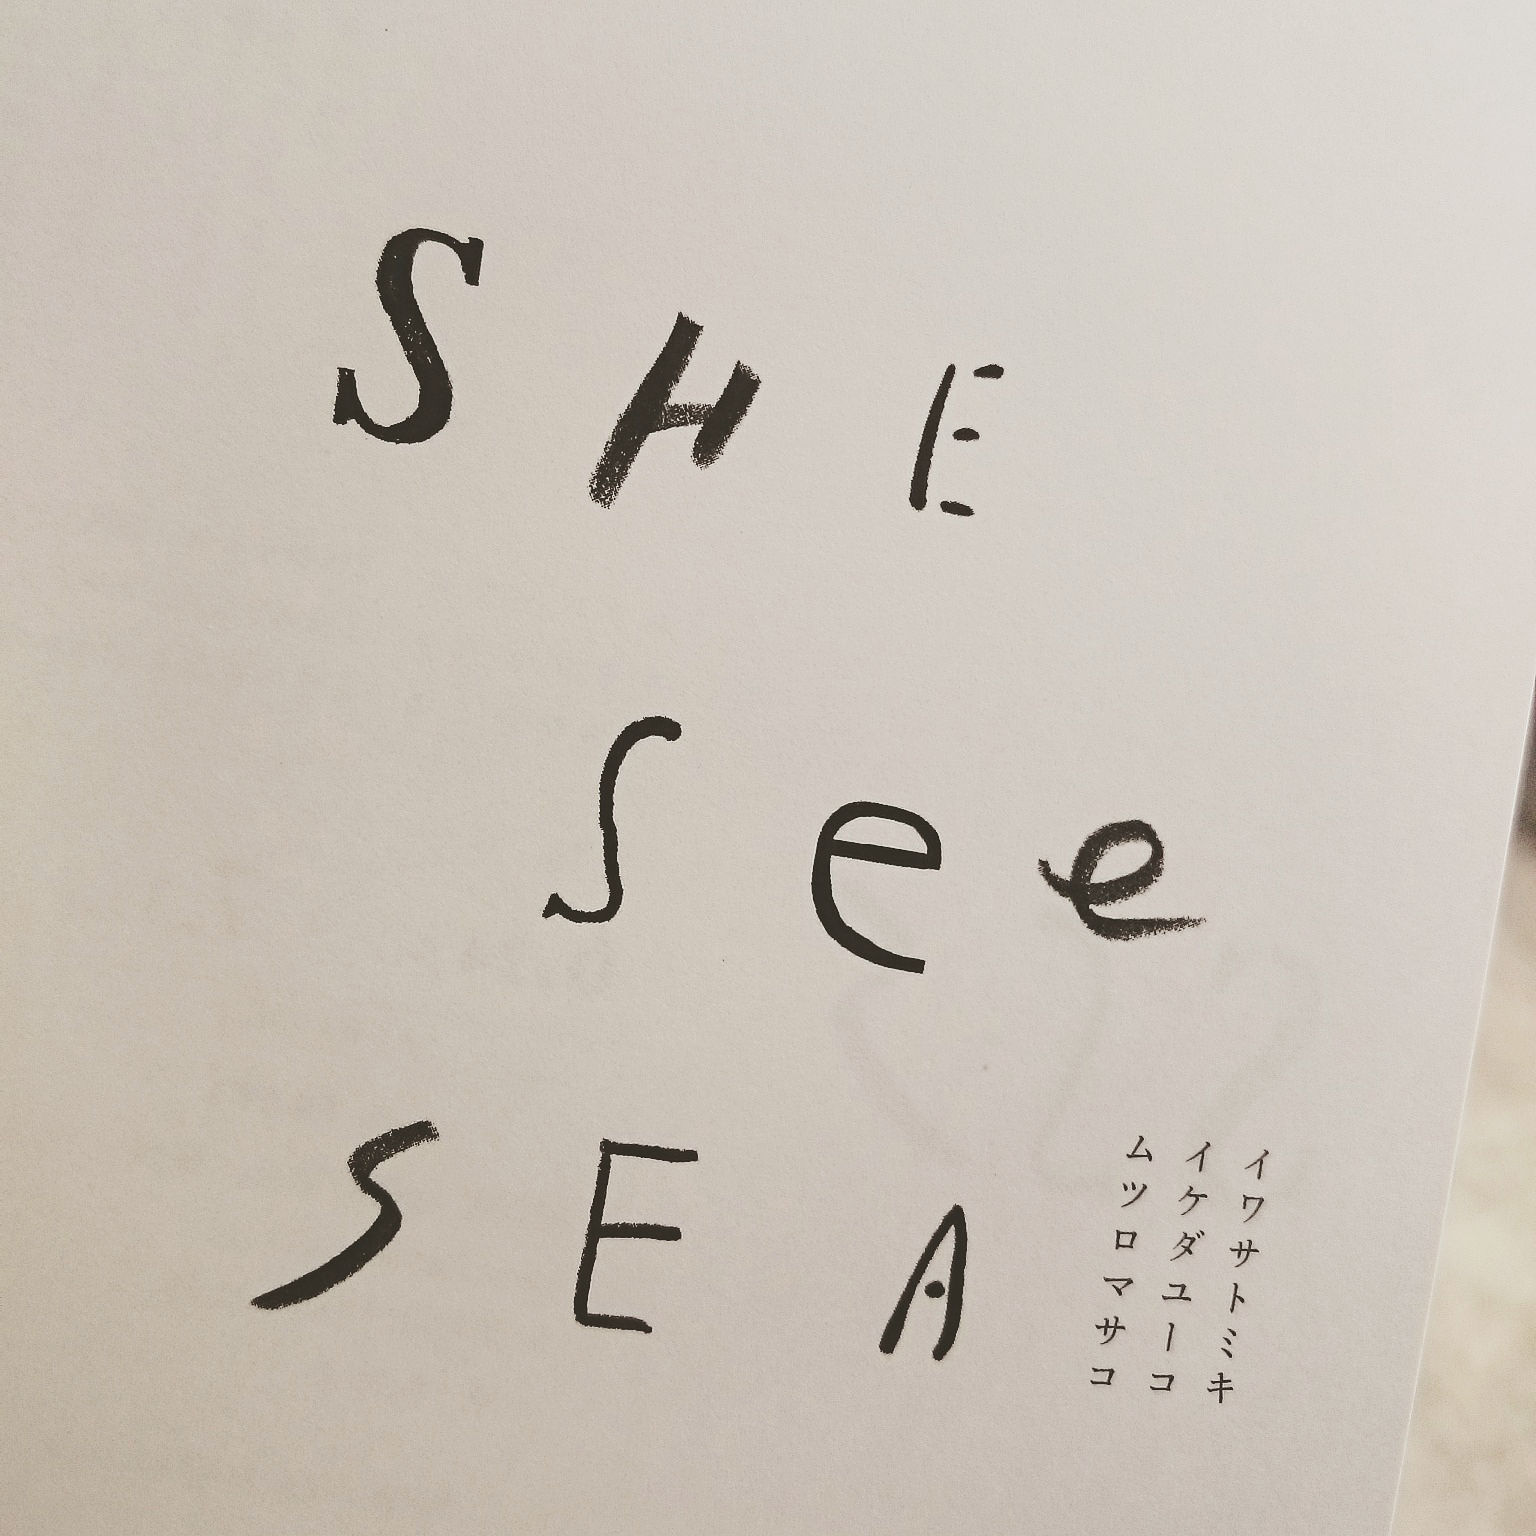 she see sea